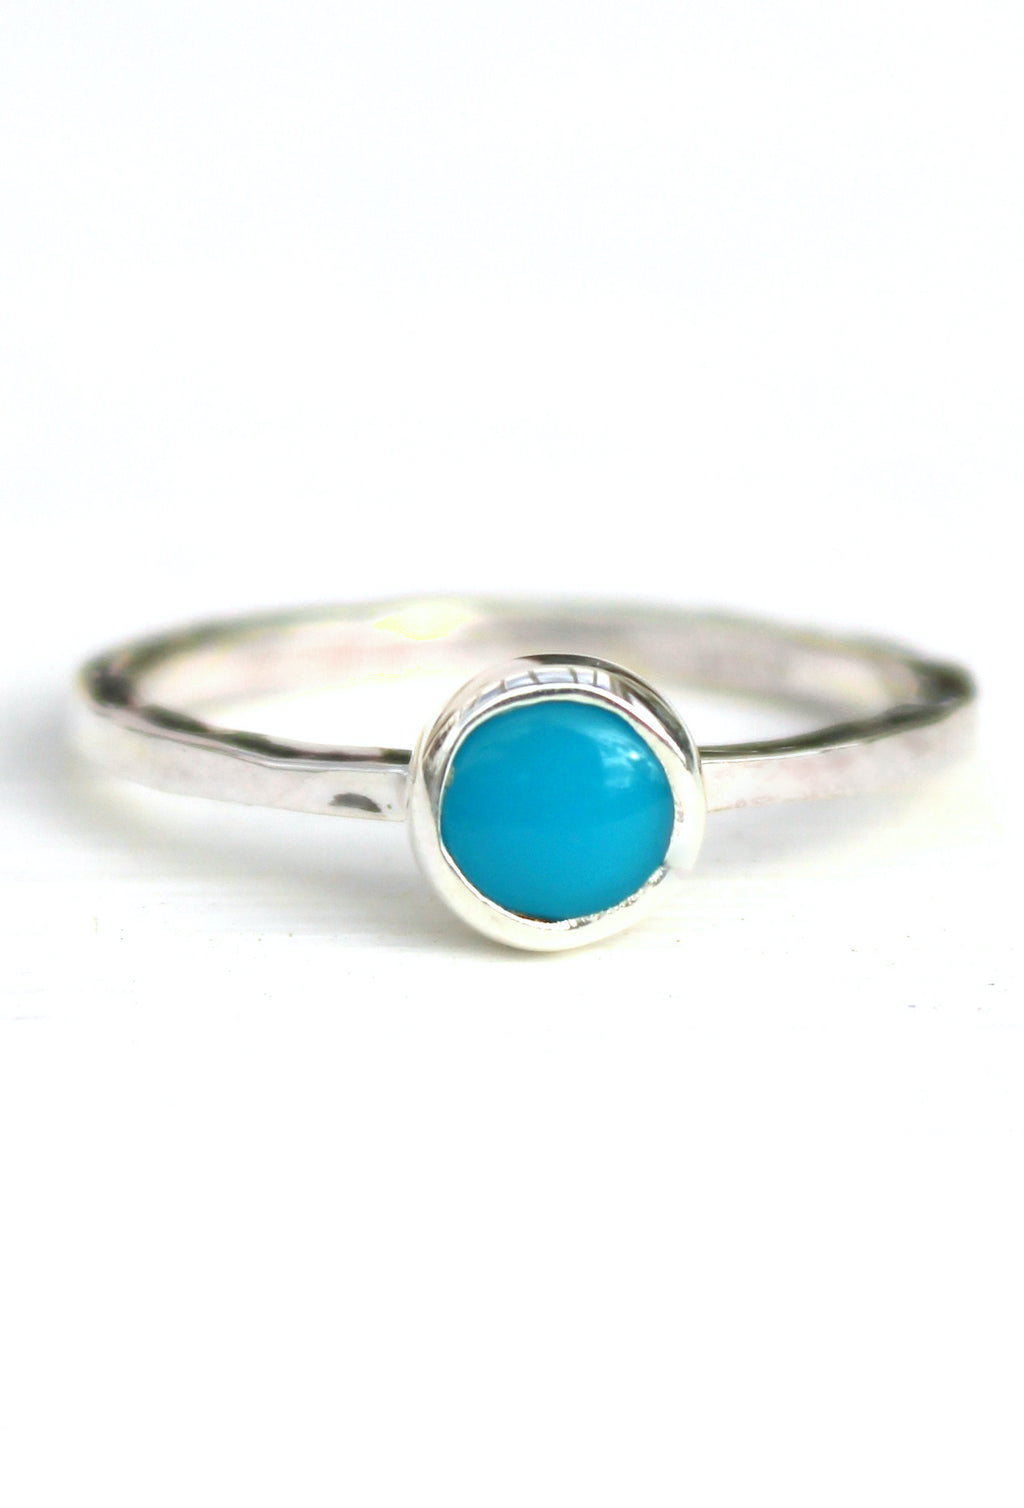 Sirena Gemstone Shimmer Stacking Ring - Turquoise & Silver